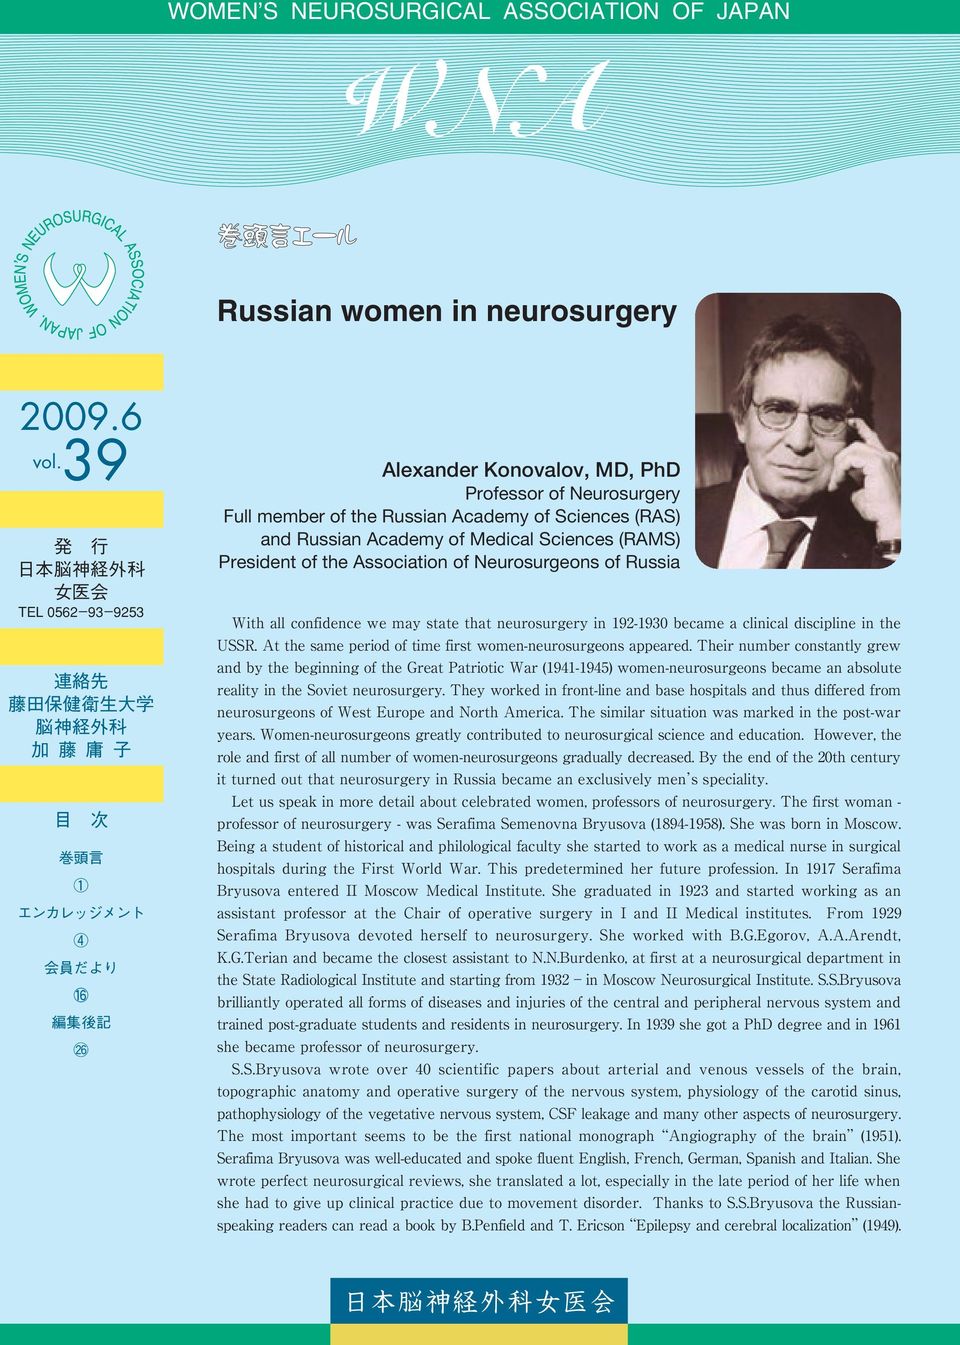 39 Alexander Konovalov, MD, PhD Professor of Neurosurgery Full member of